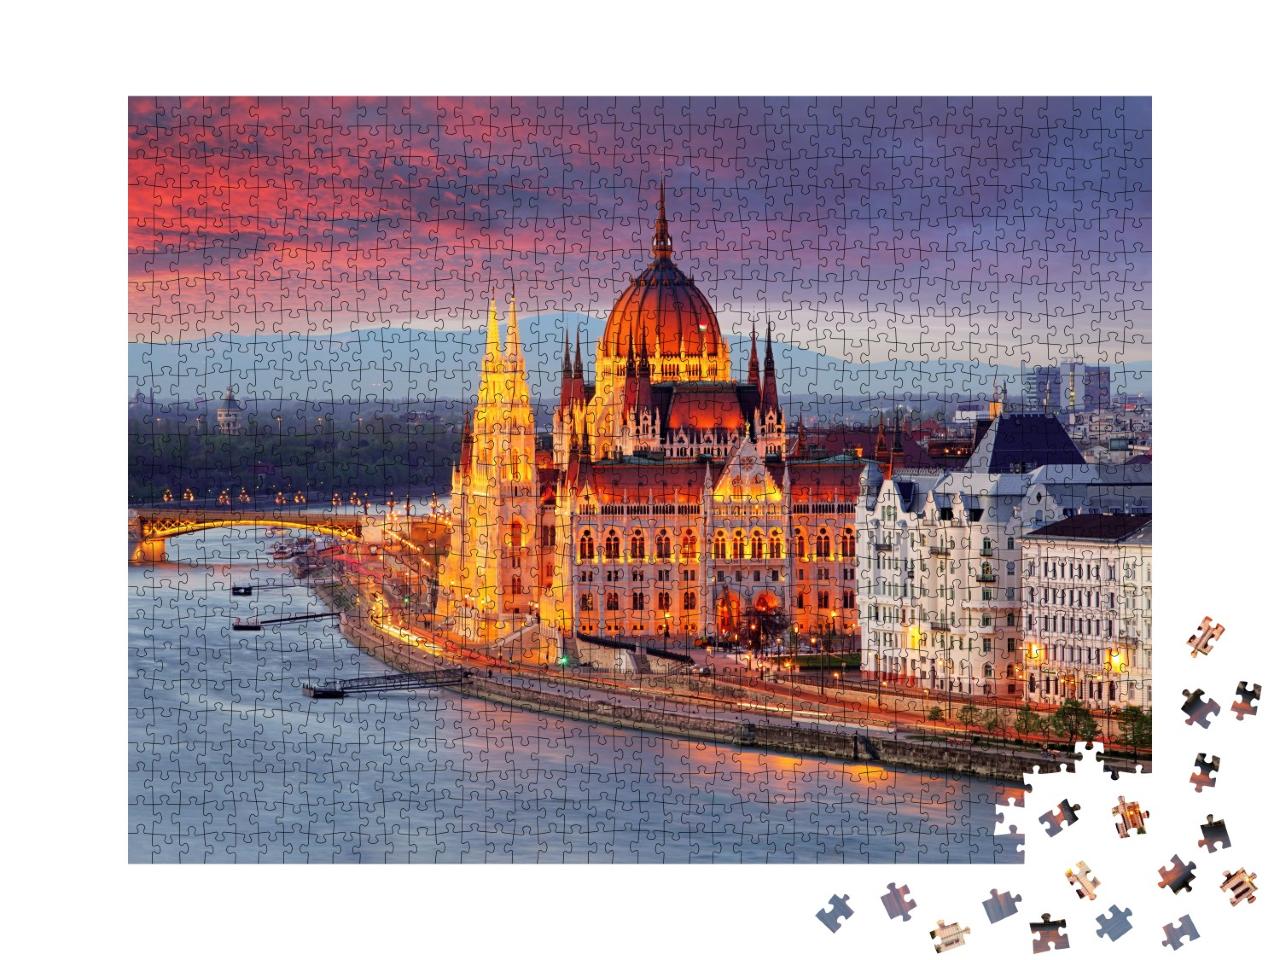 Puzzle 1000 Teile „Ungarisches Parlament, Budapest bei Sonnenuntergang“